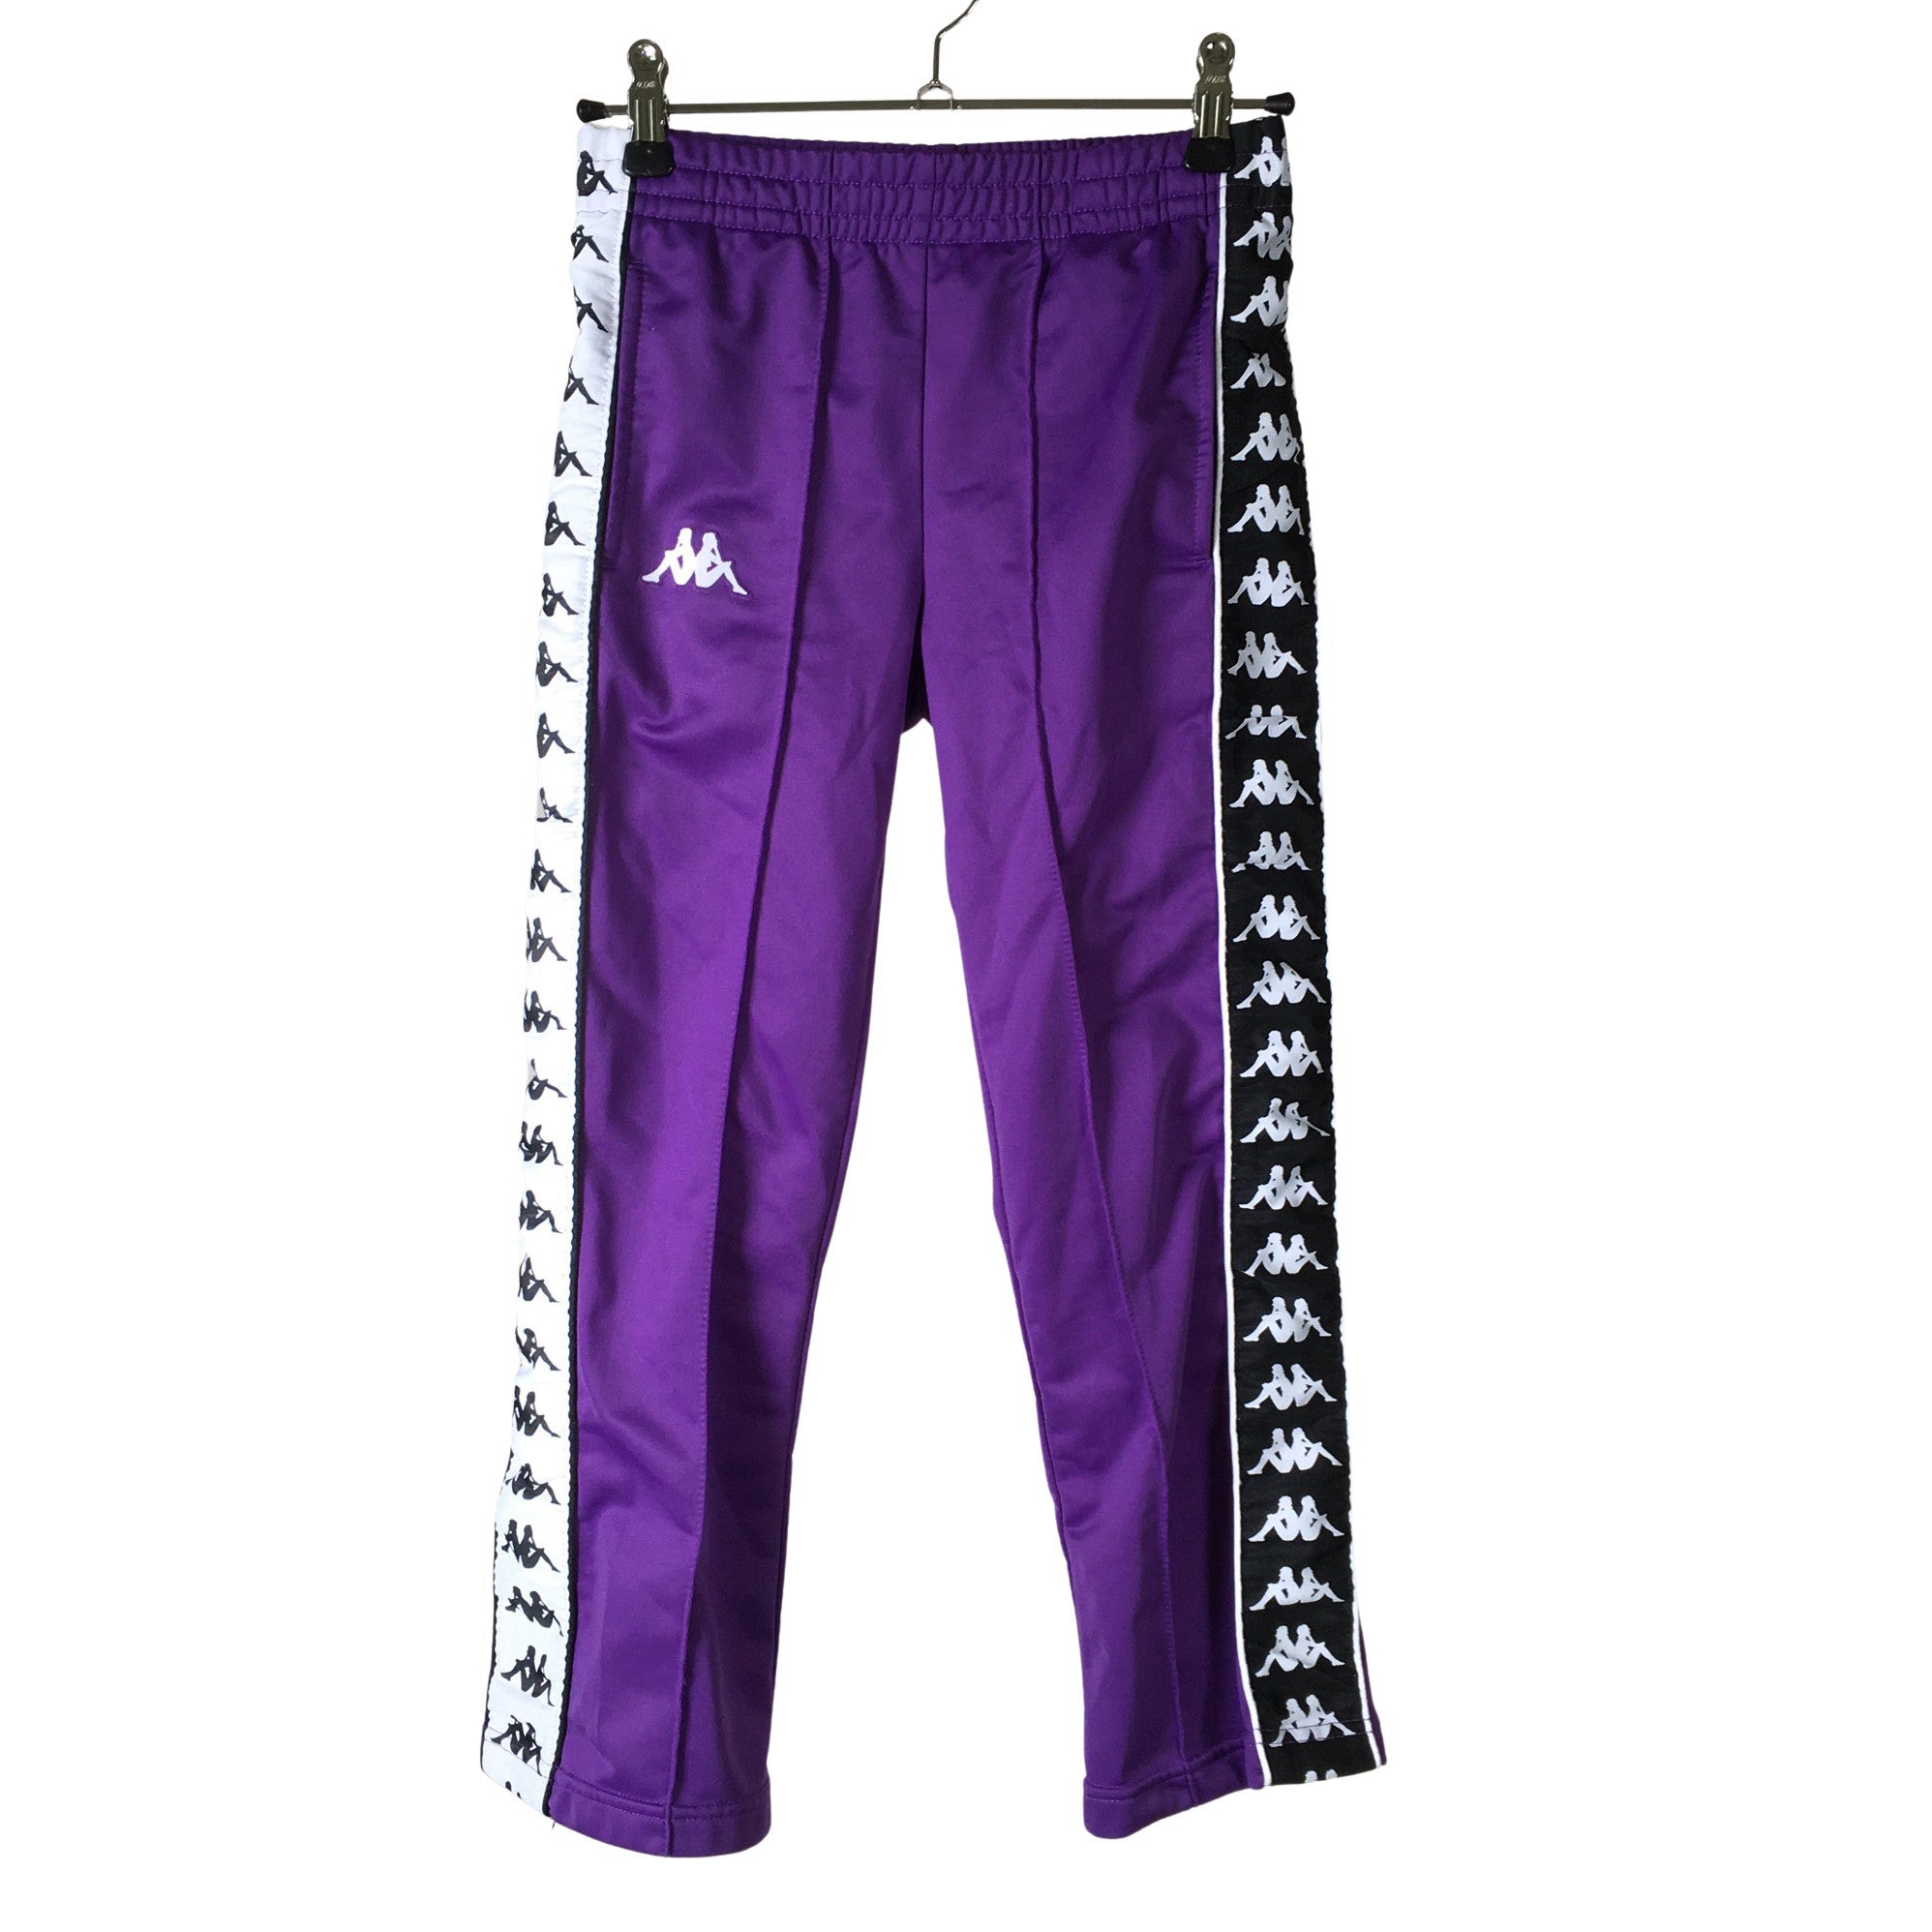 Unisex Kappa Track pants, size 122 - 128 (Purple) | Emmy